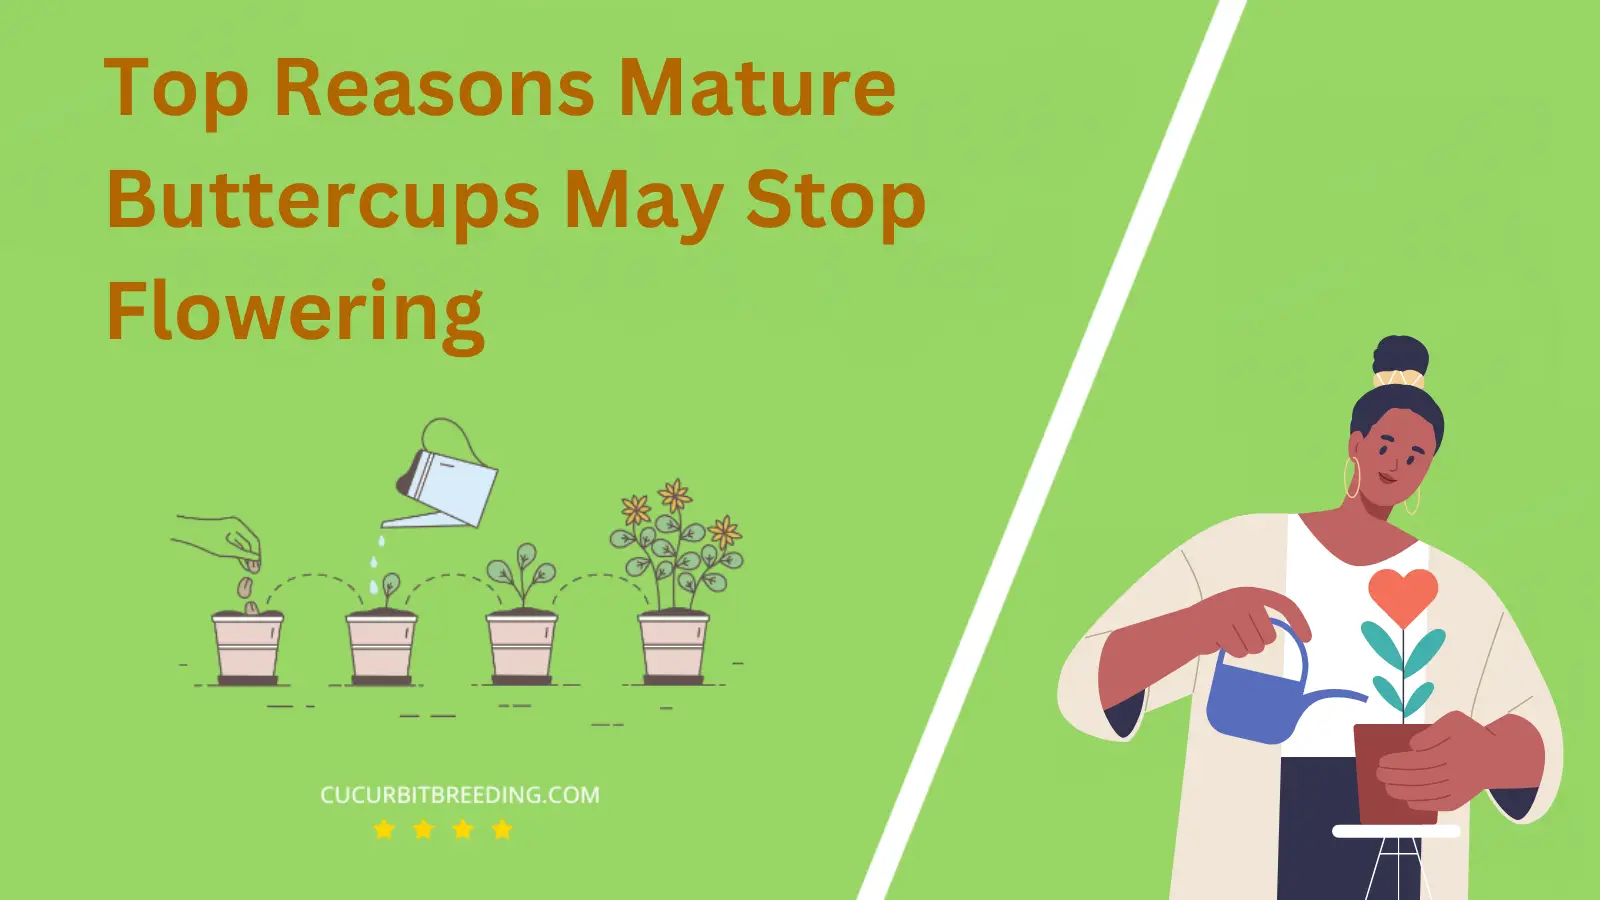 Top Reasons Mature Buttercups May Stop Flowering